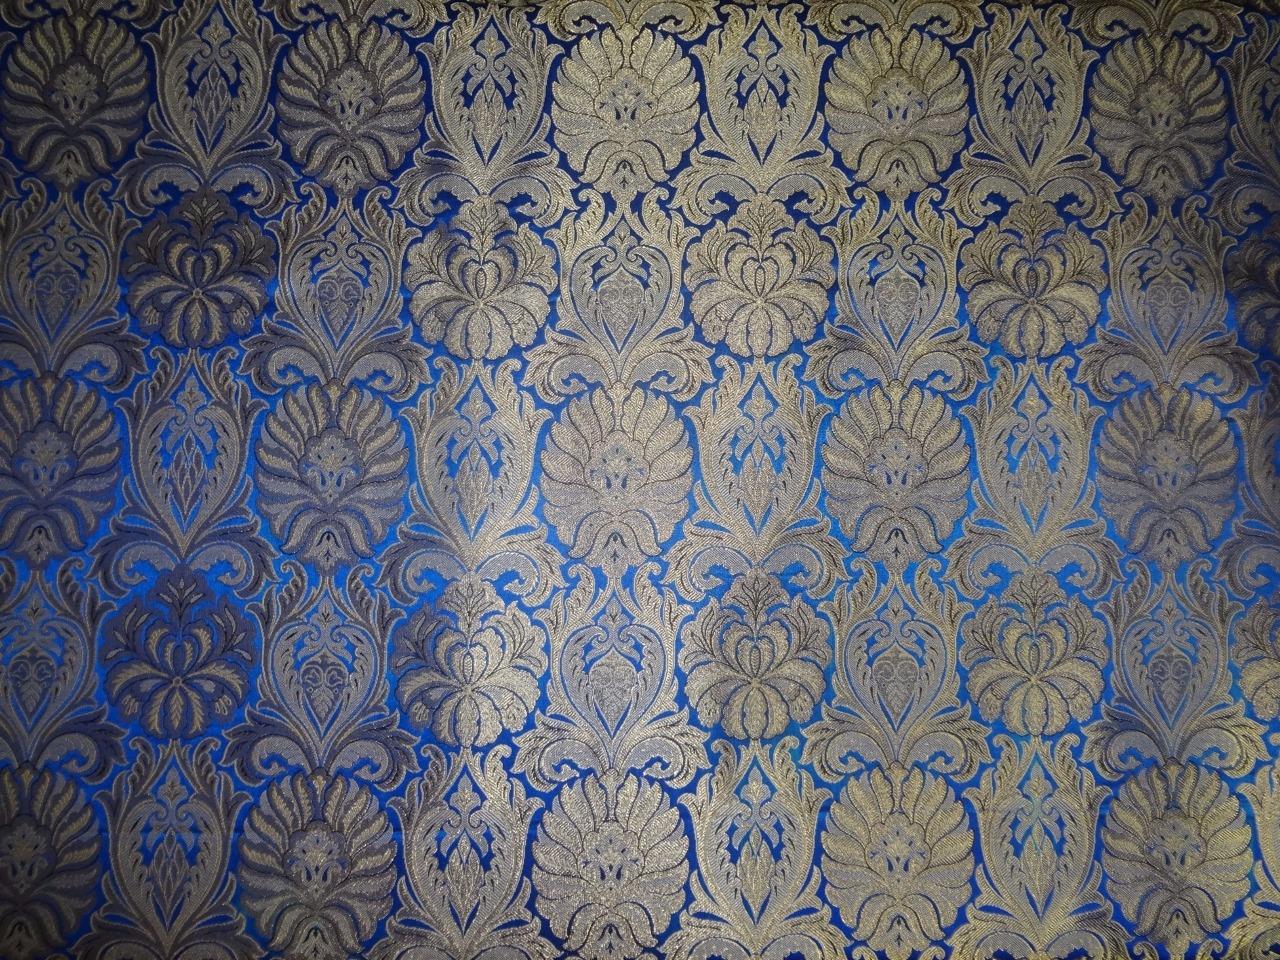 Silk Brocade Fabric electric blue and mettalic gold color 44" wide BRO544[1]